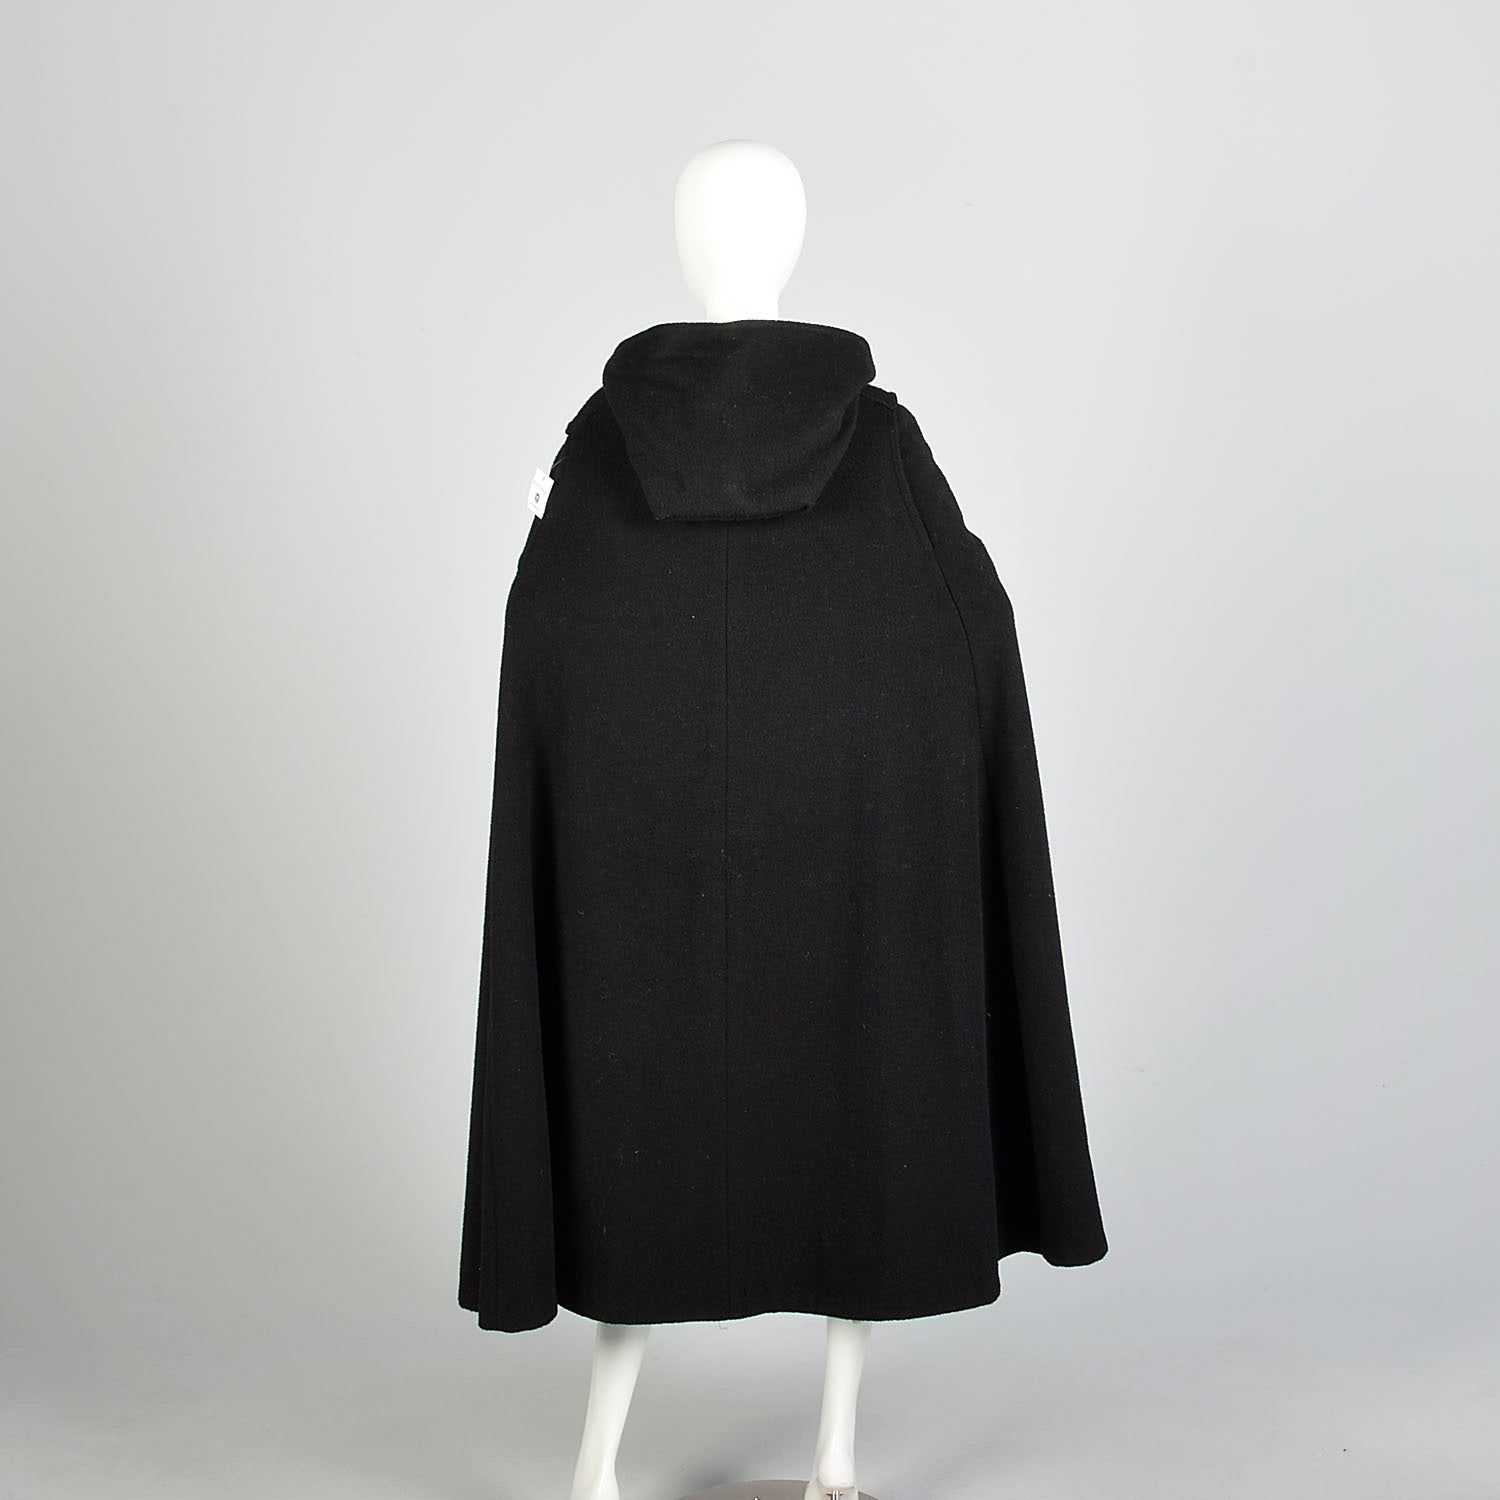 OSFM 1980s Heavy Hooded Wool Cape Black Winter Cloak Wool Hood Thick